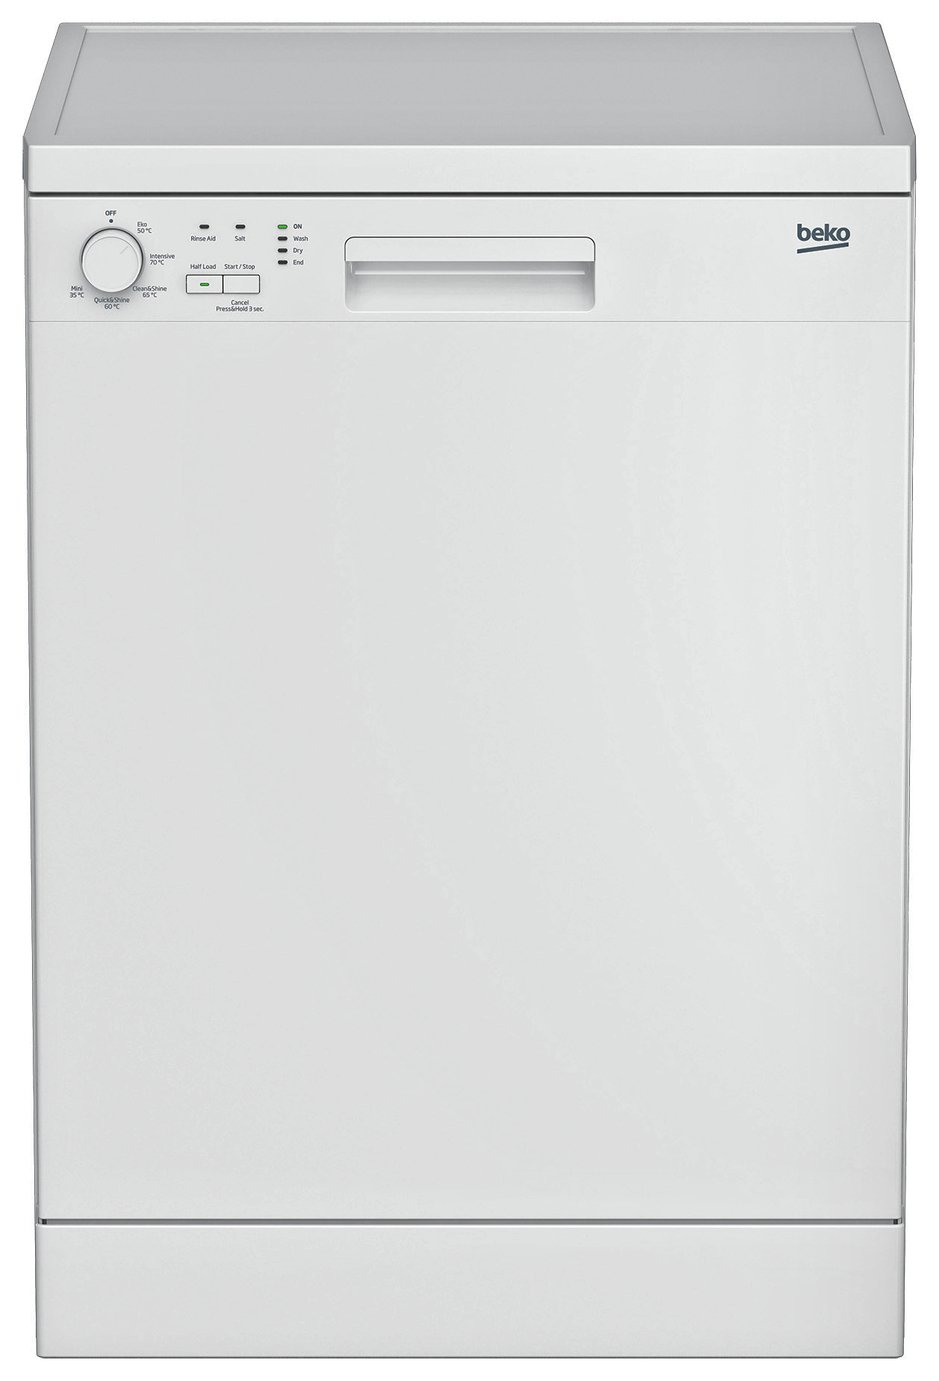 Beko DFN05310W Full Size Dishwasher - White